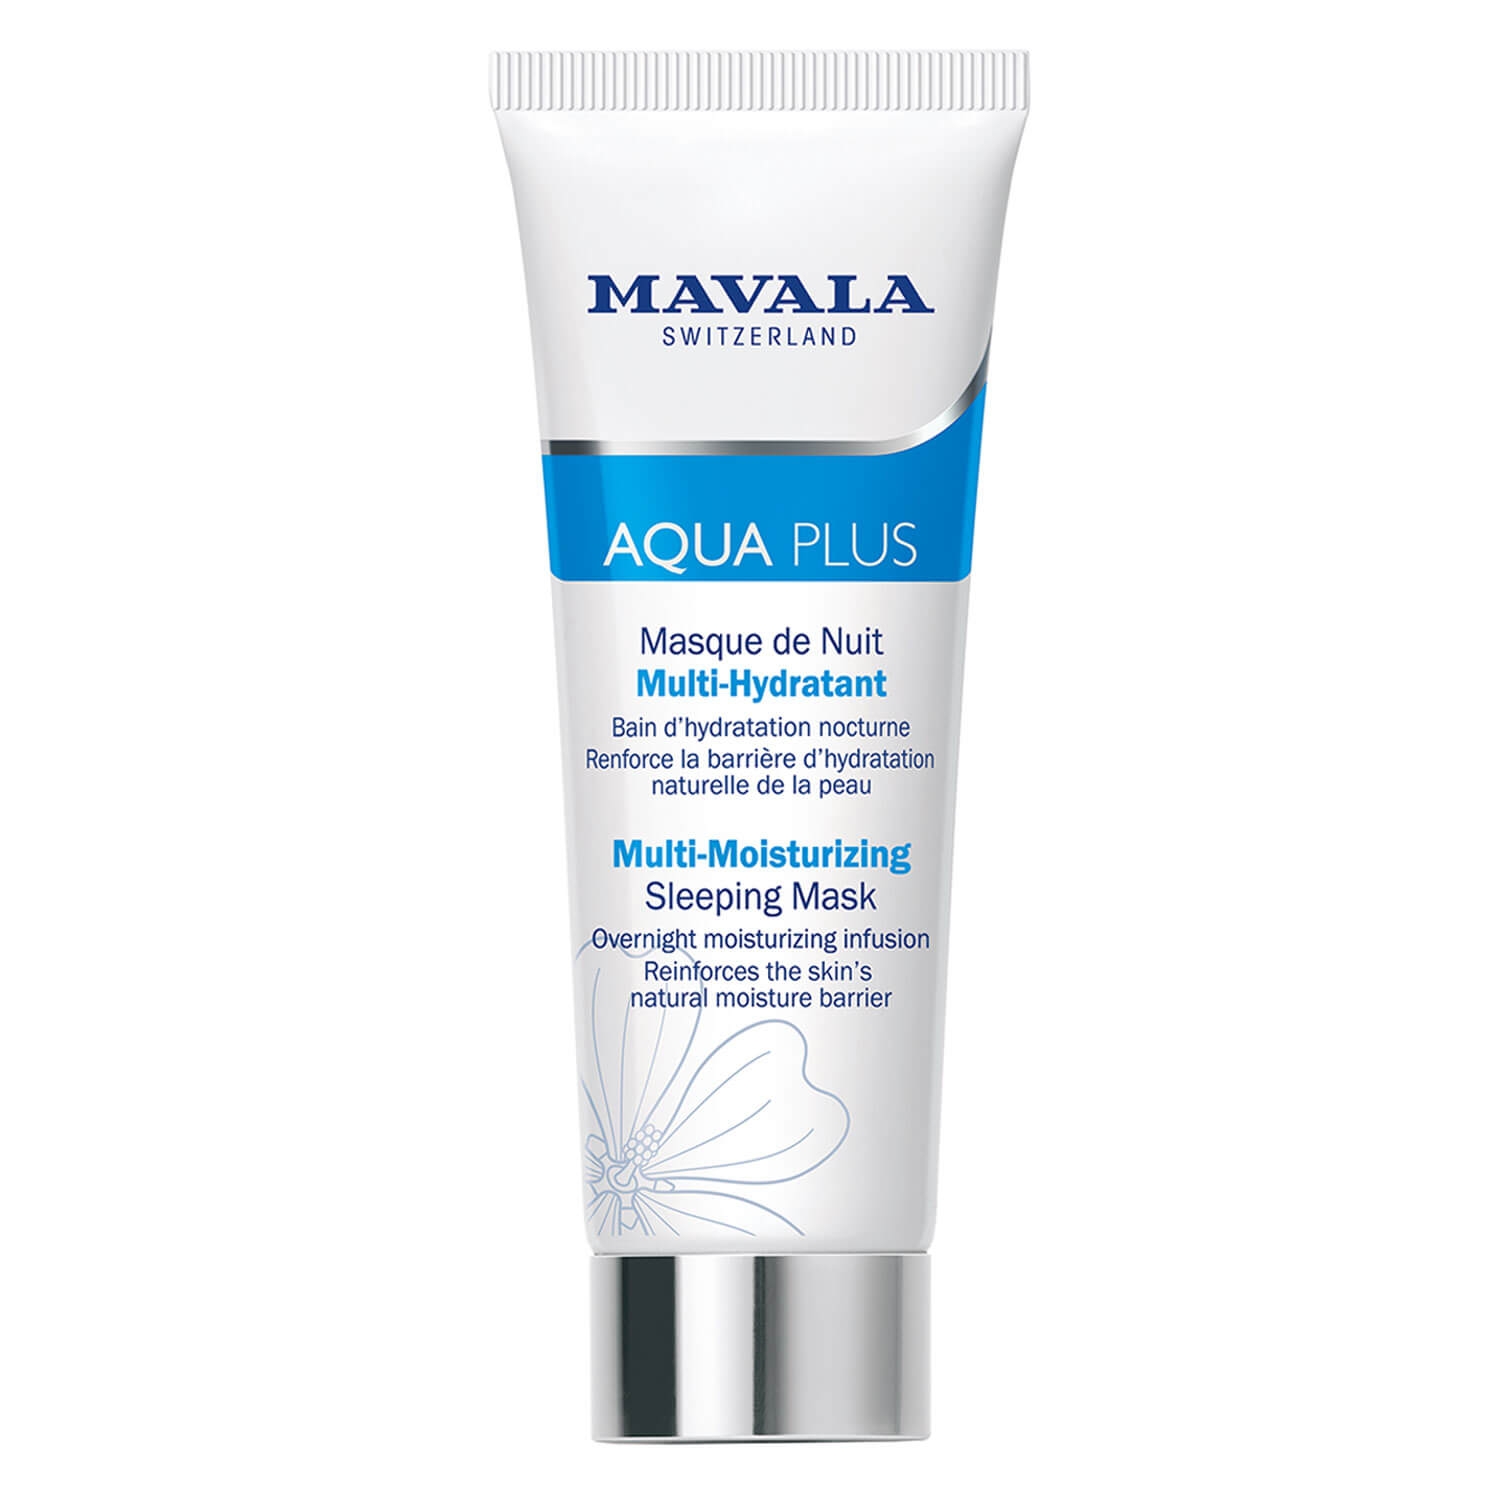 Product image from Swiss Skin Solution - Aqua Plus Masque de Nuit Multi-Hydratant